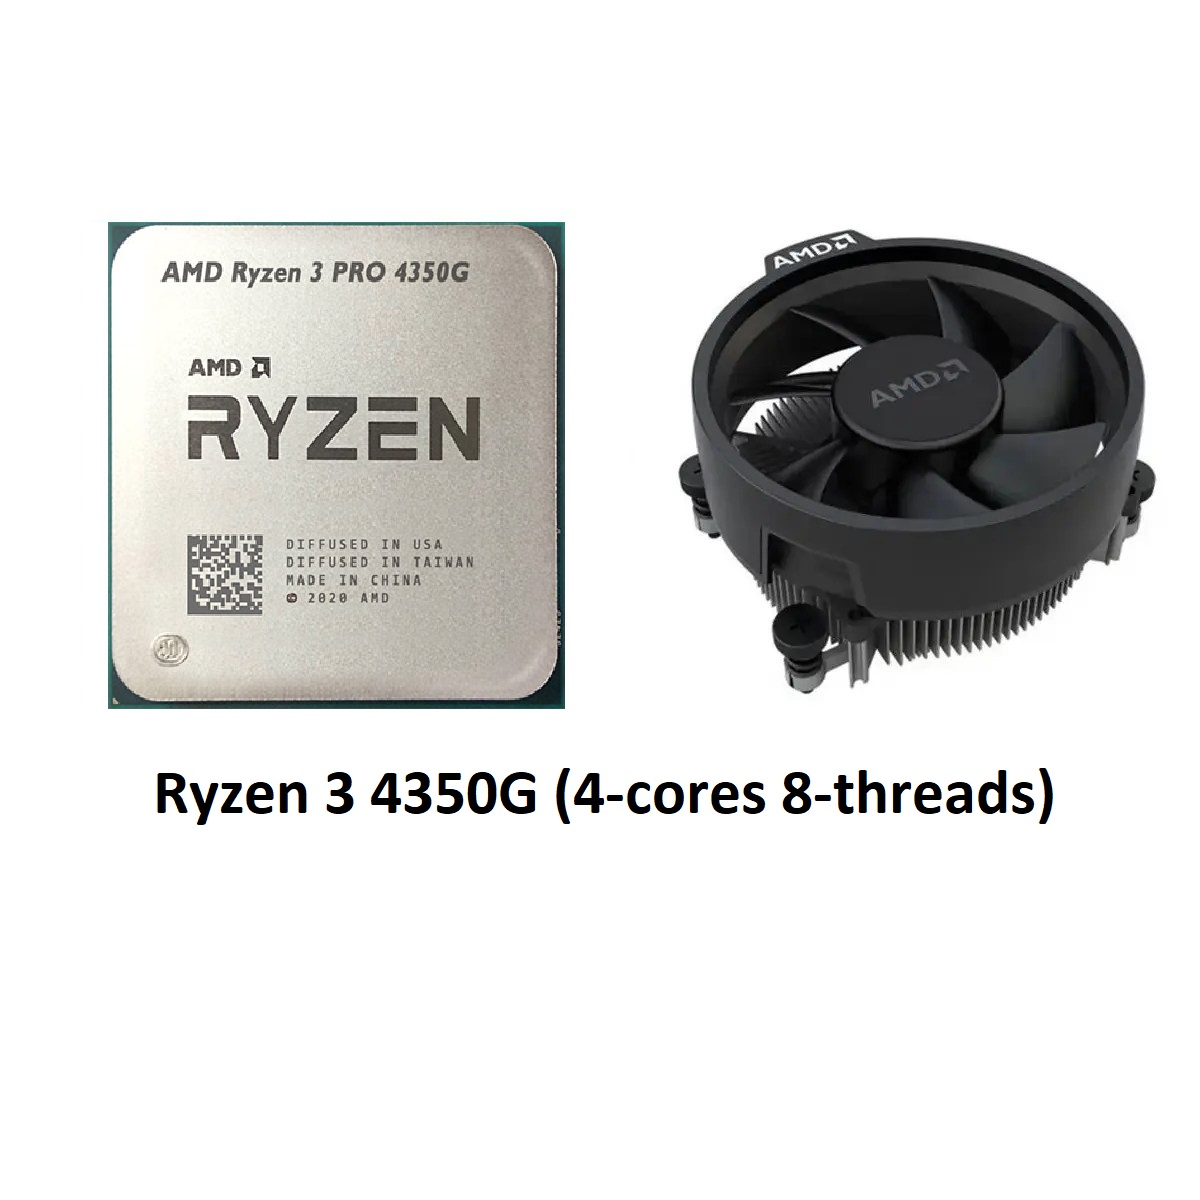 Ryzen 3 pro 4350g. Кулер AMD Ryzen 3 Pro 4350g. AMD Ryzen 3 Pro 4350g am4, 4 x 3800 МГЦ. Ryzen 3 4350g Pro в 3d. Ryzen 3 4350g характеристика.